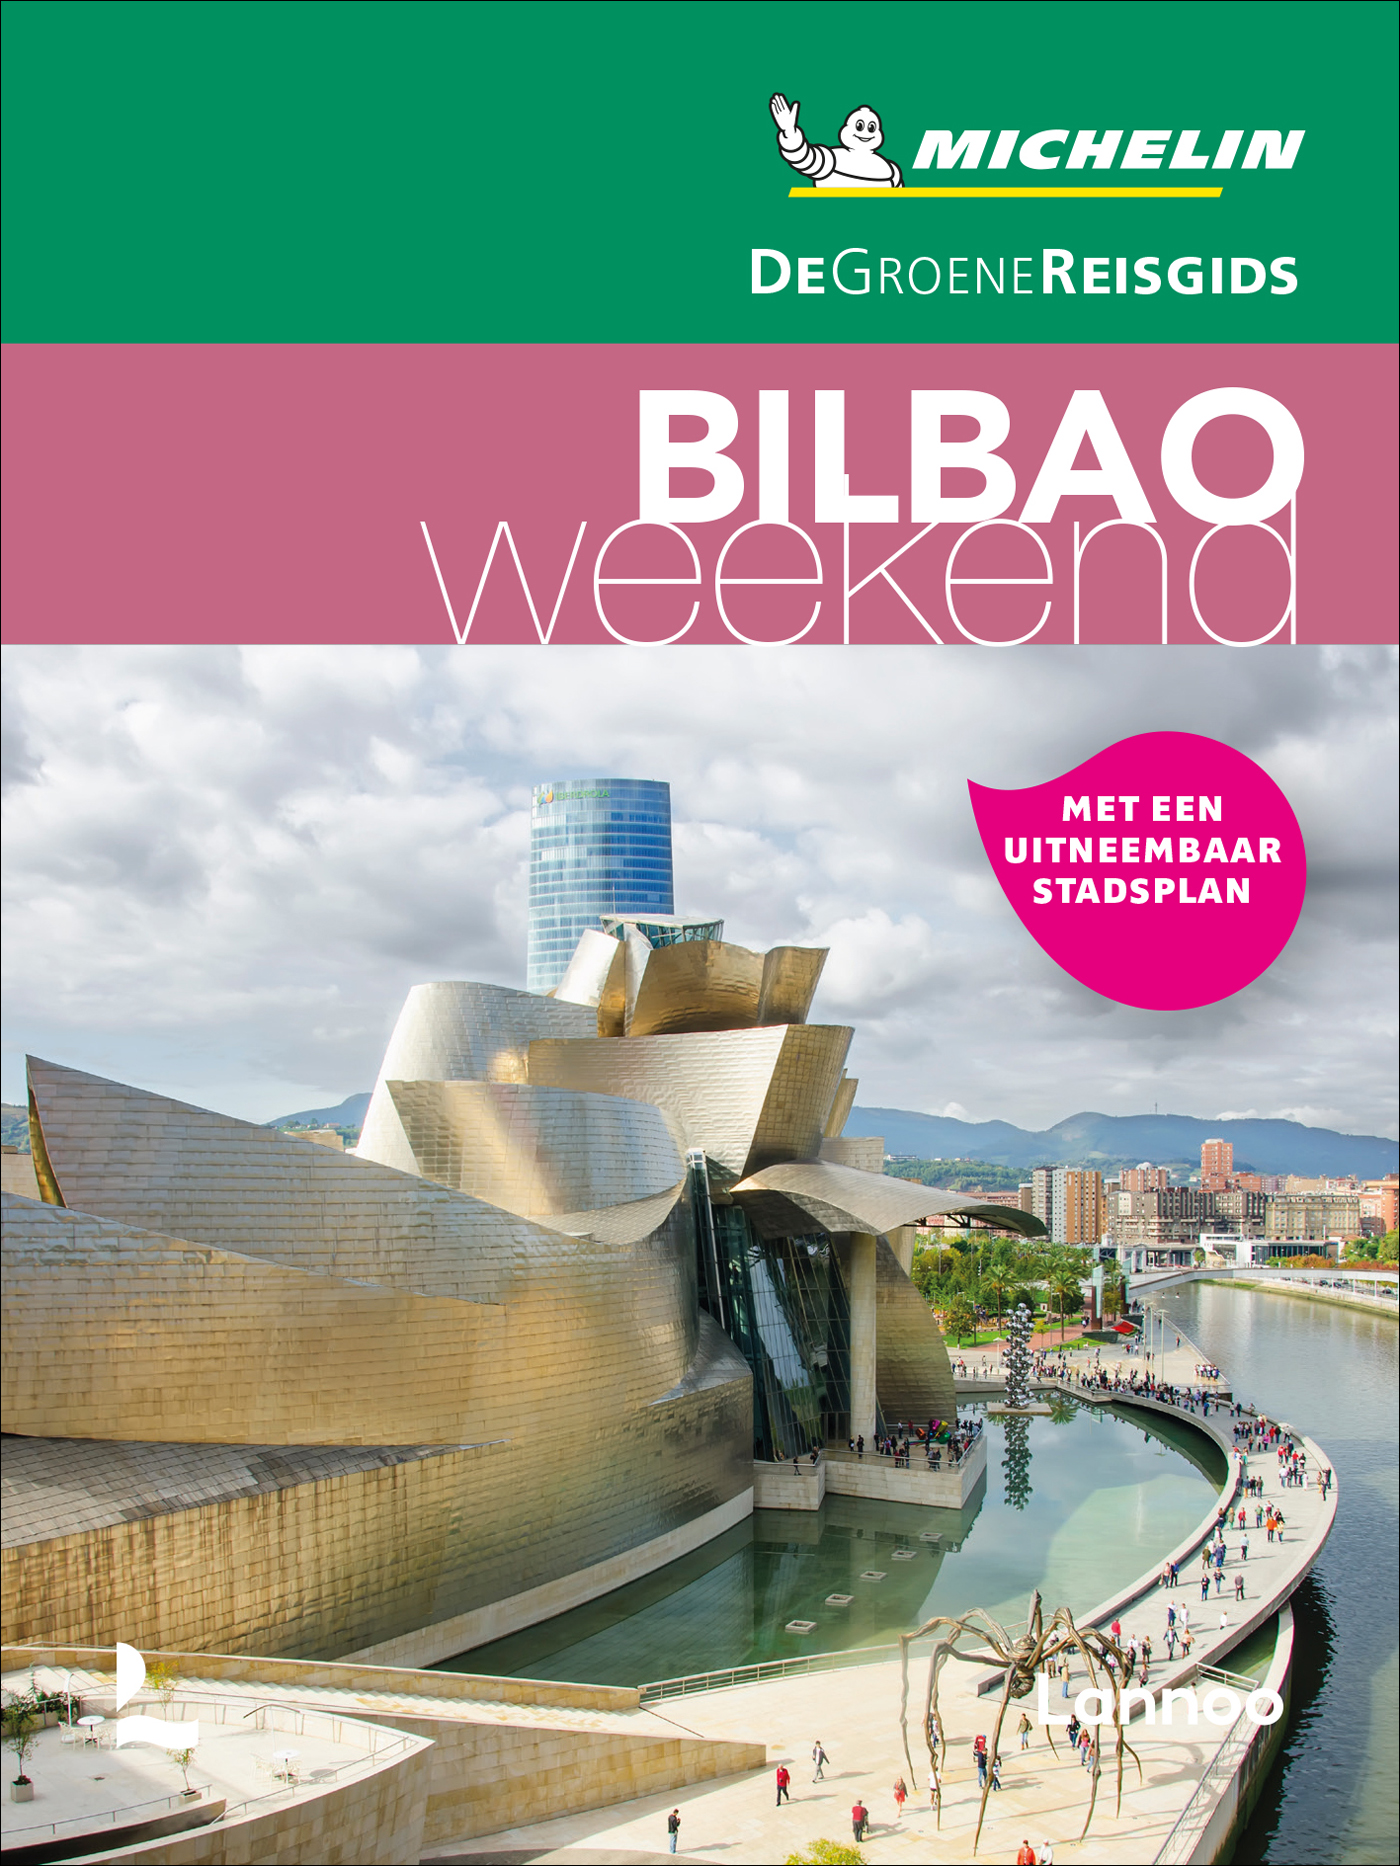 Online bestellen: Reisgids Michelin groene gids weekend Bilbao | Lannoo